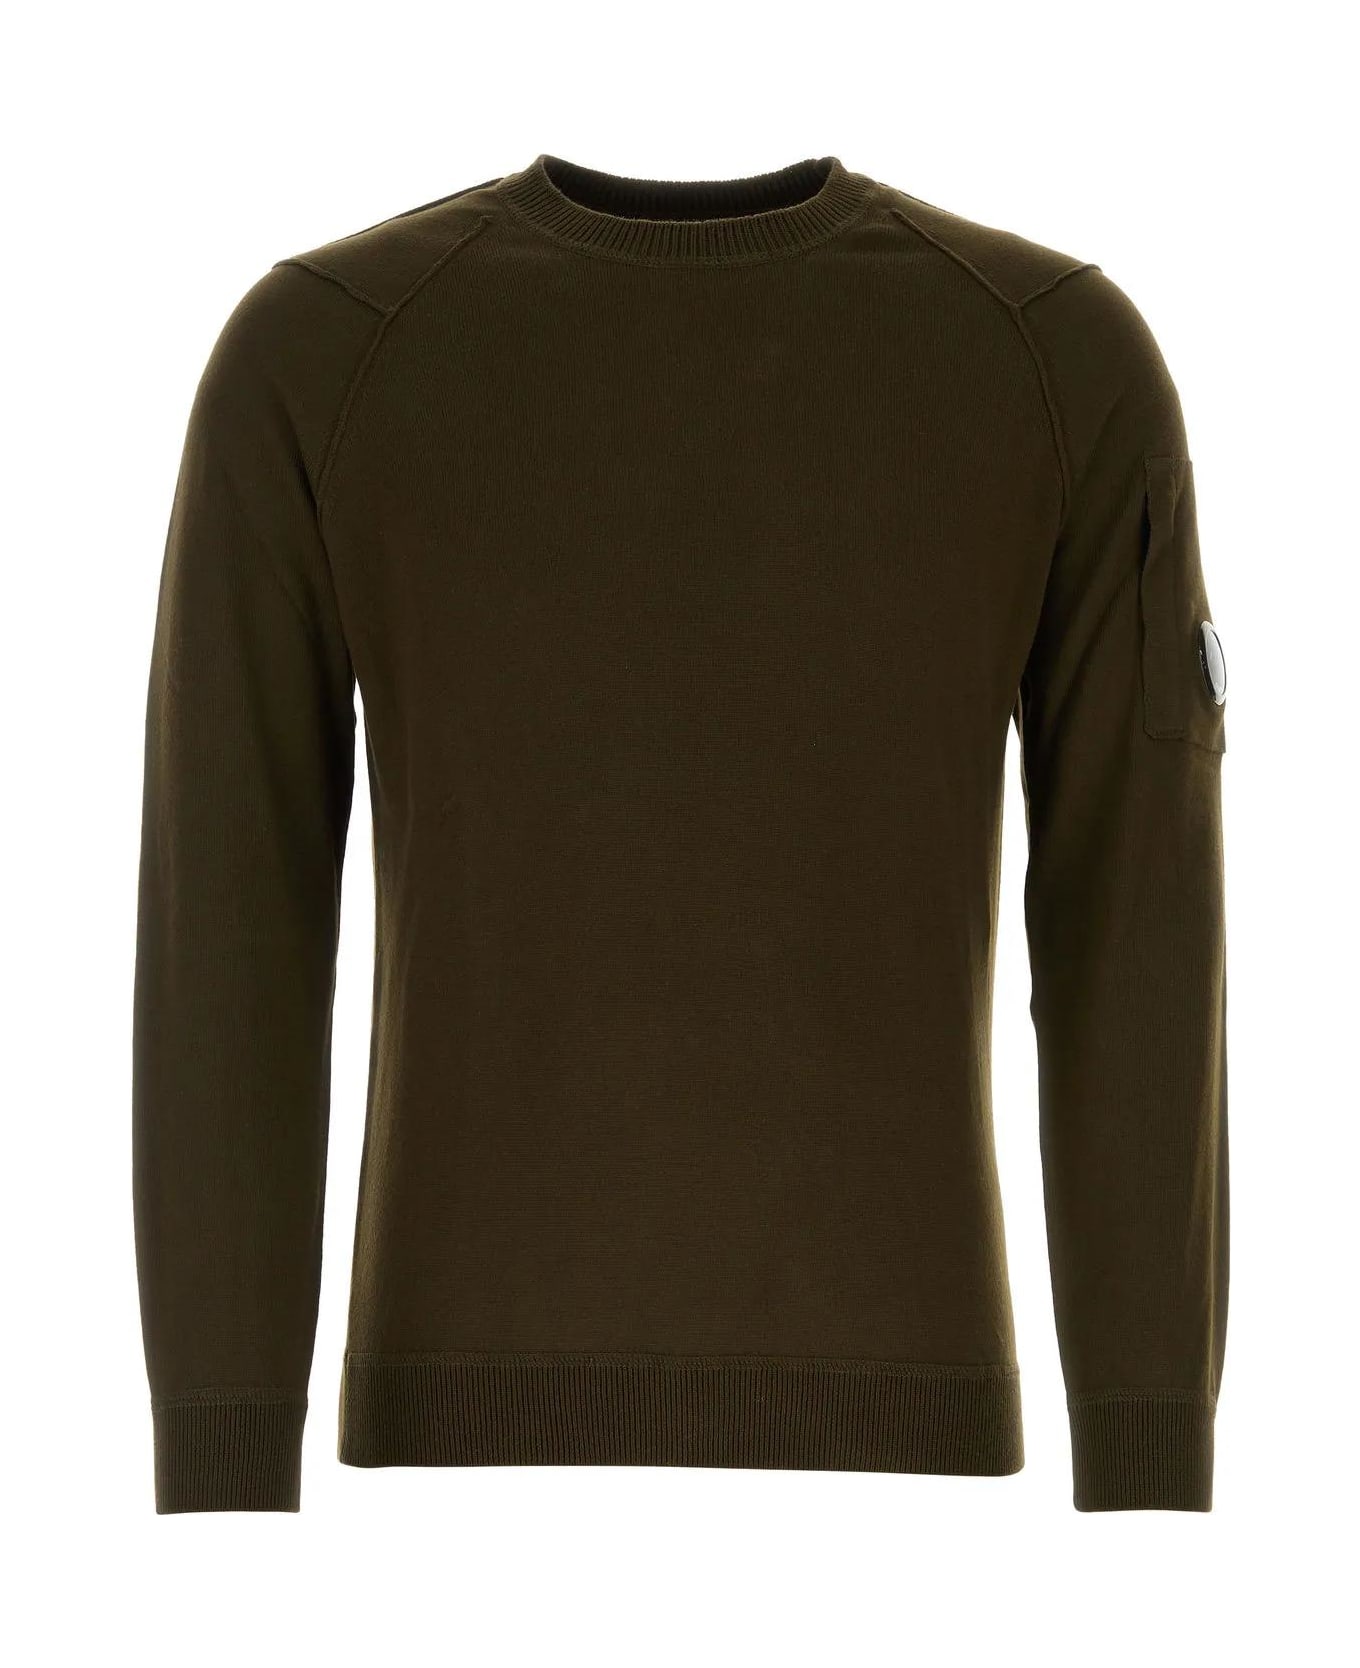 C.P. Company Dark Green Cotton Sweater - IVY GREEN ニットウェア